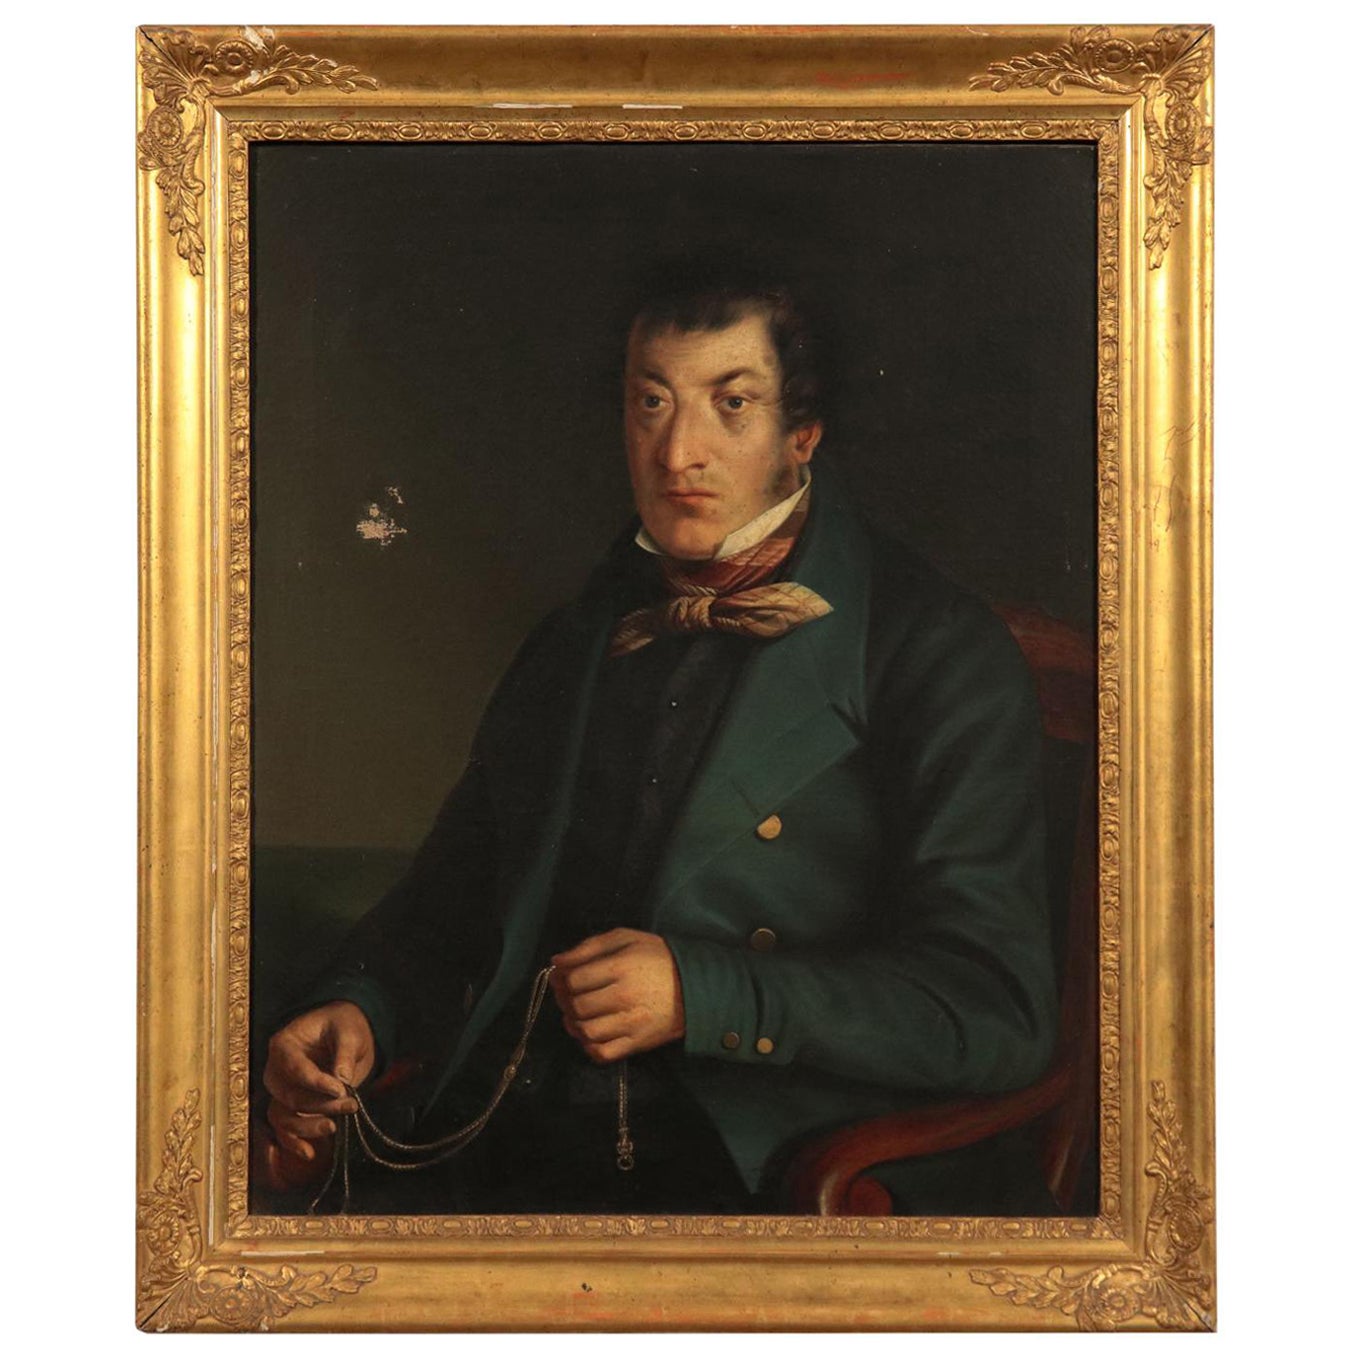 Unknown Portrait Painting - Male Portrait, Oil on Canvas, Lombard School 19th Century